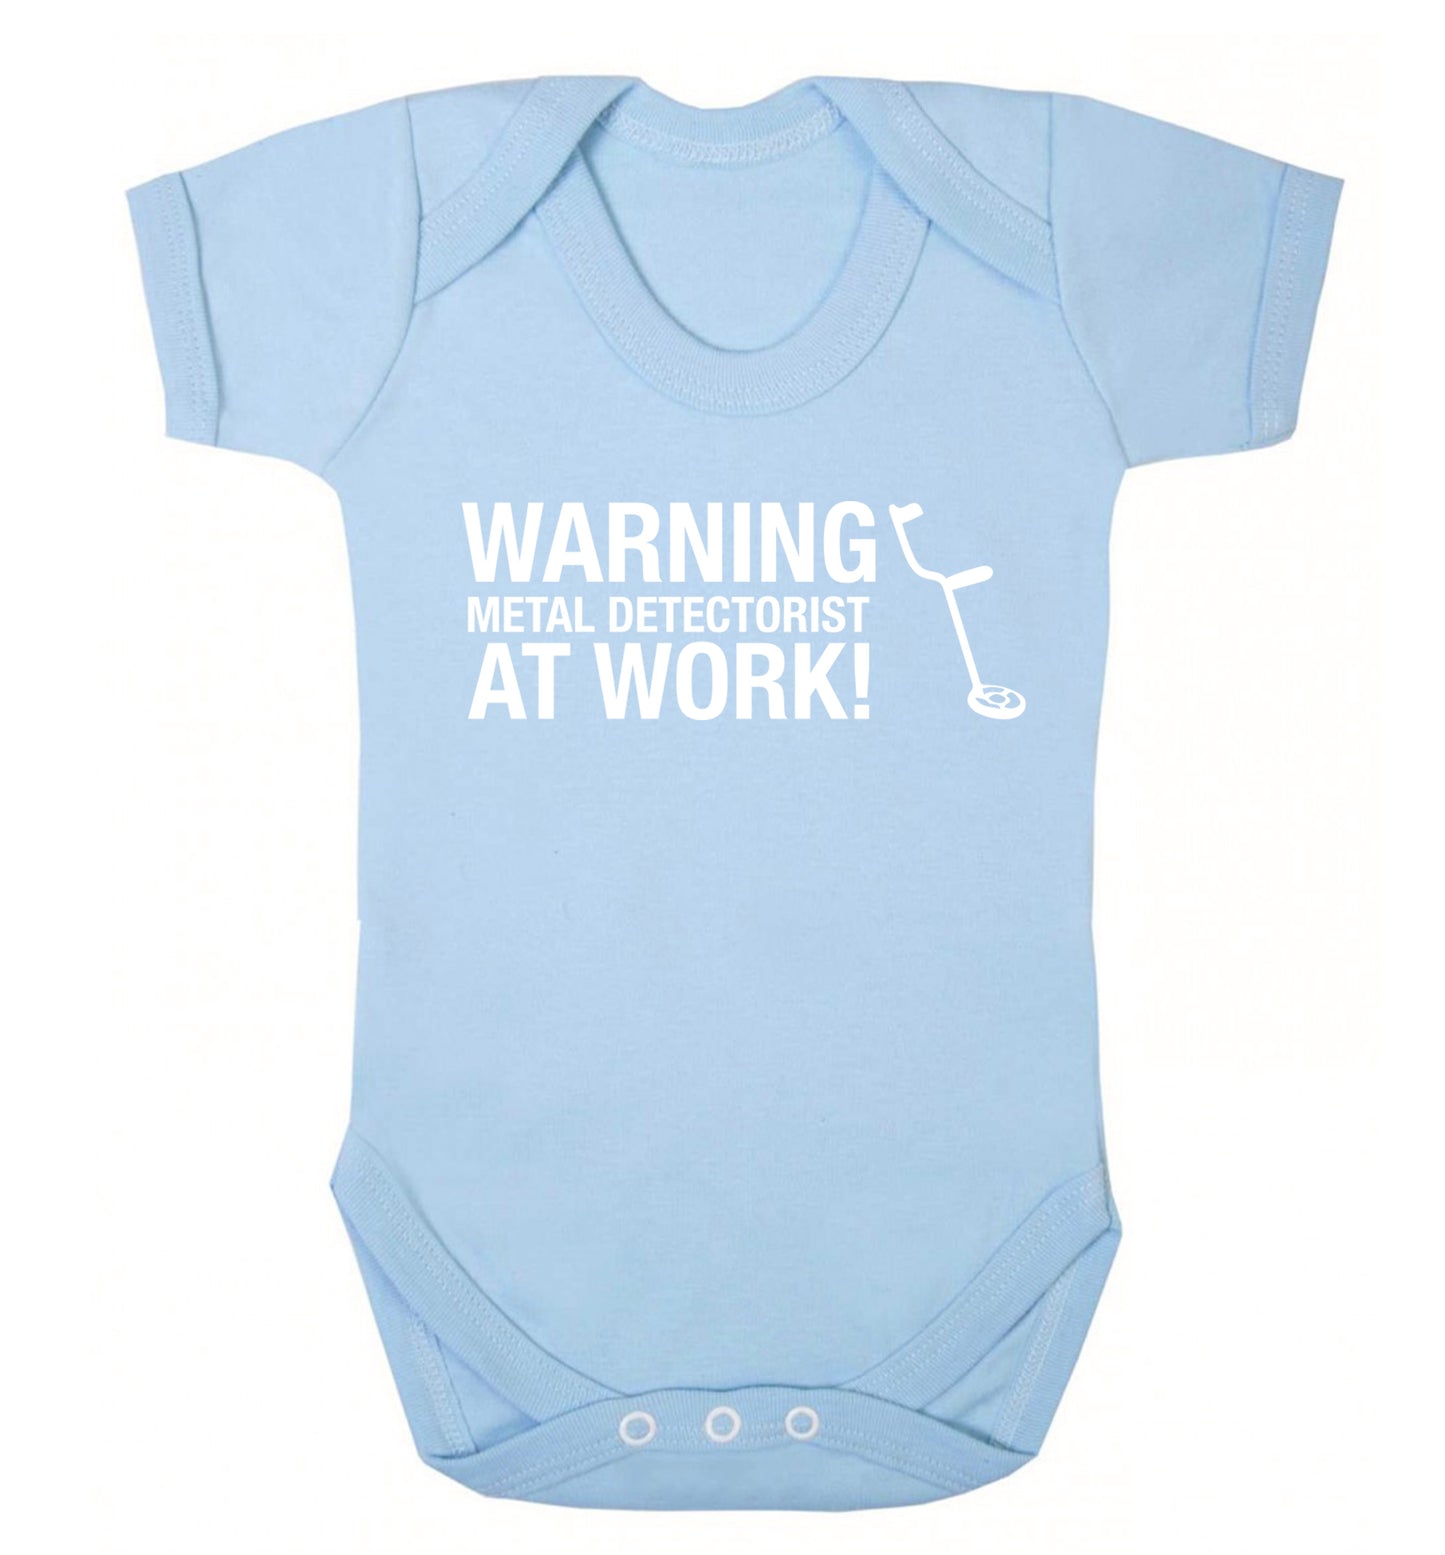 Warning metal detectorist at work! Baby Vest pale blue 18-24 months